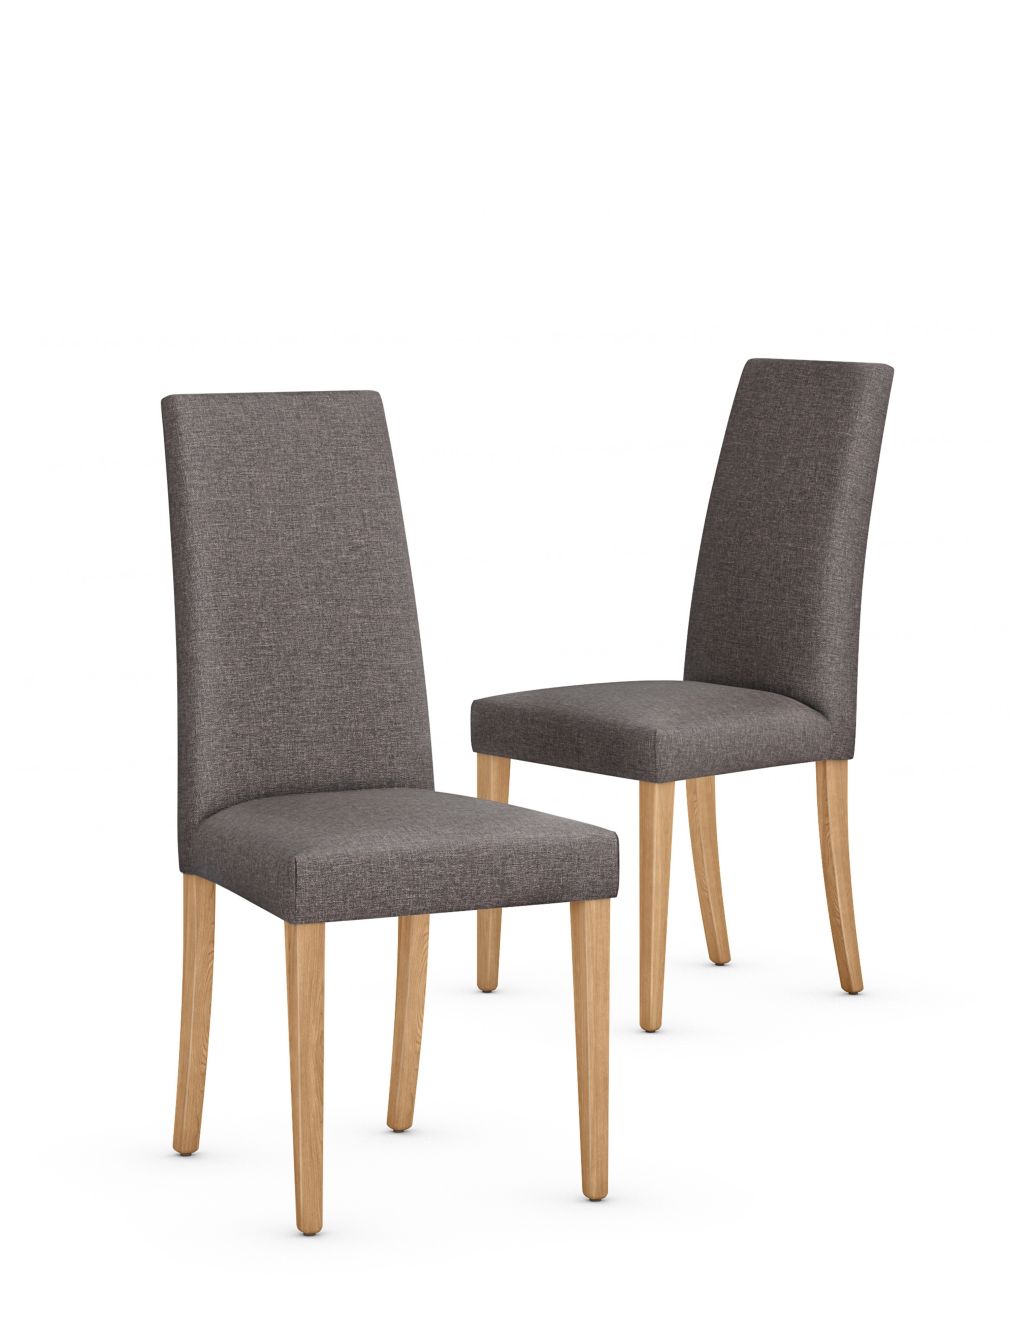 Set of 2 Alton Plain Dining Chairs image 2